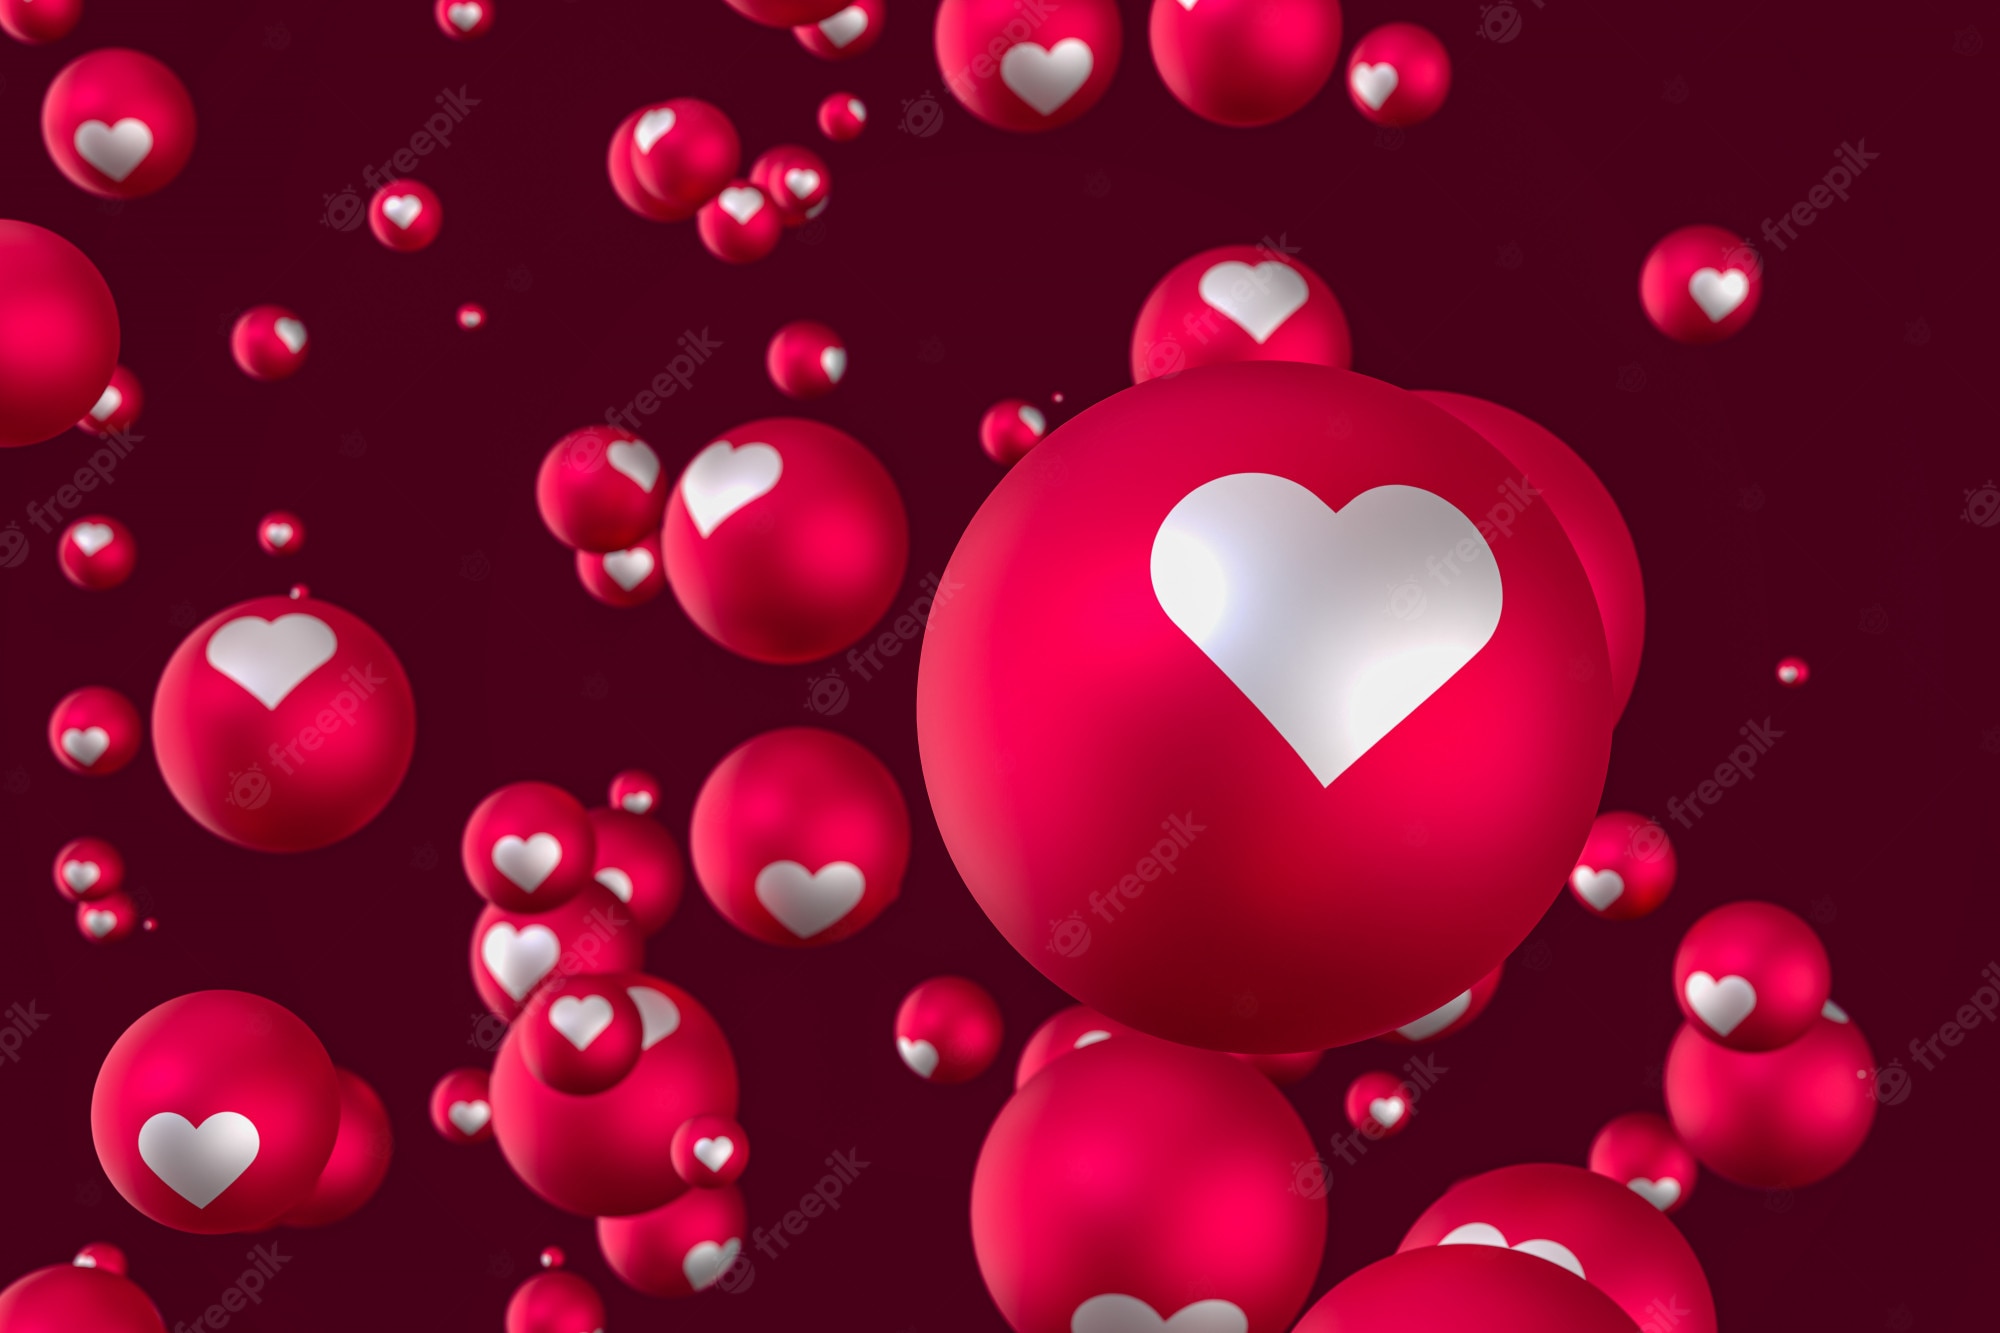 Premium Photo. Facebook reactions heart emoji 3D render on red background